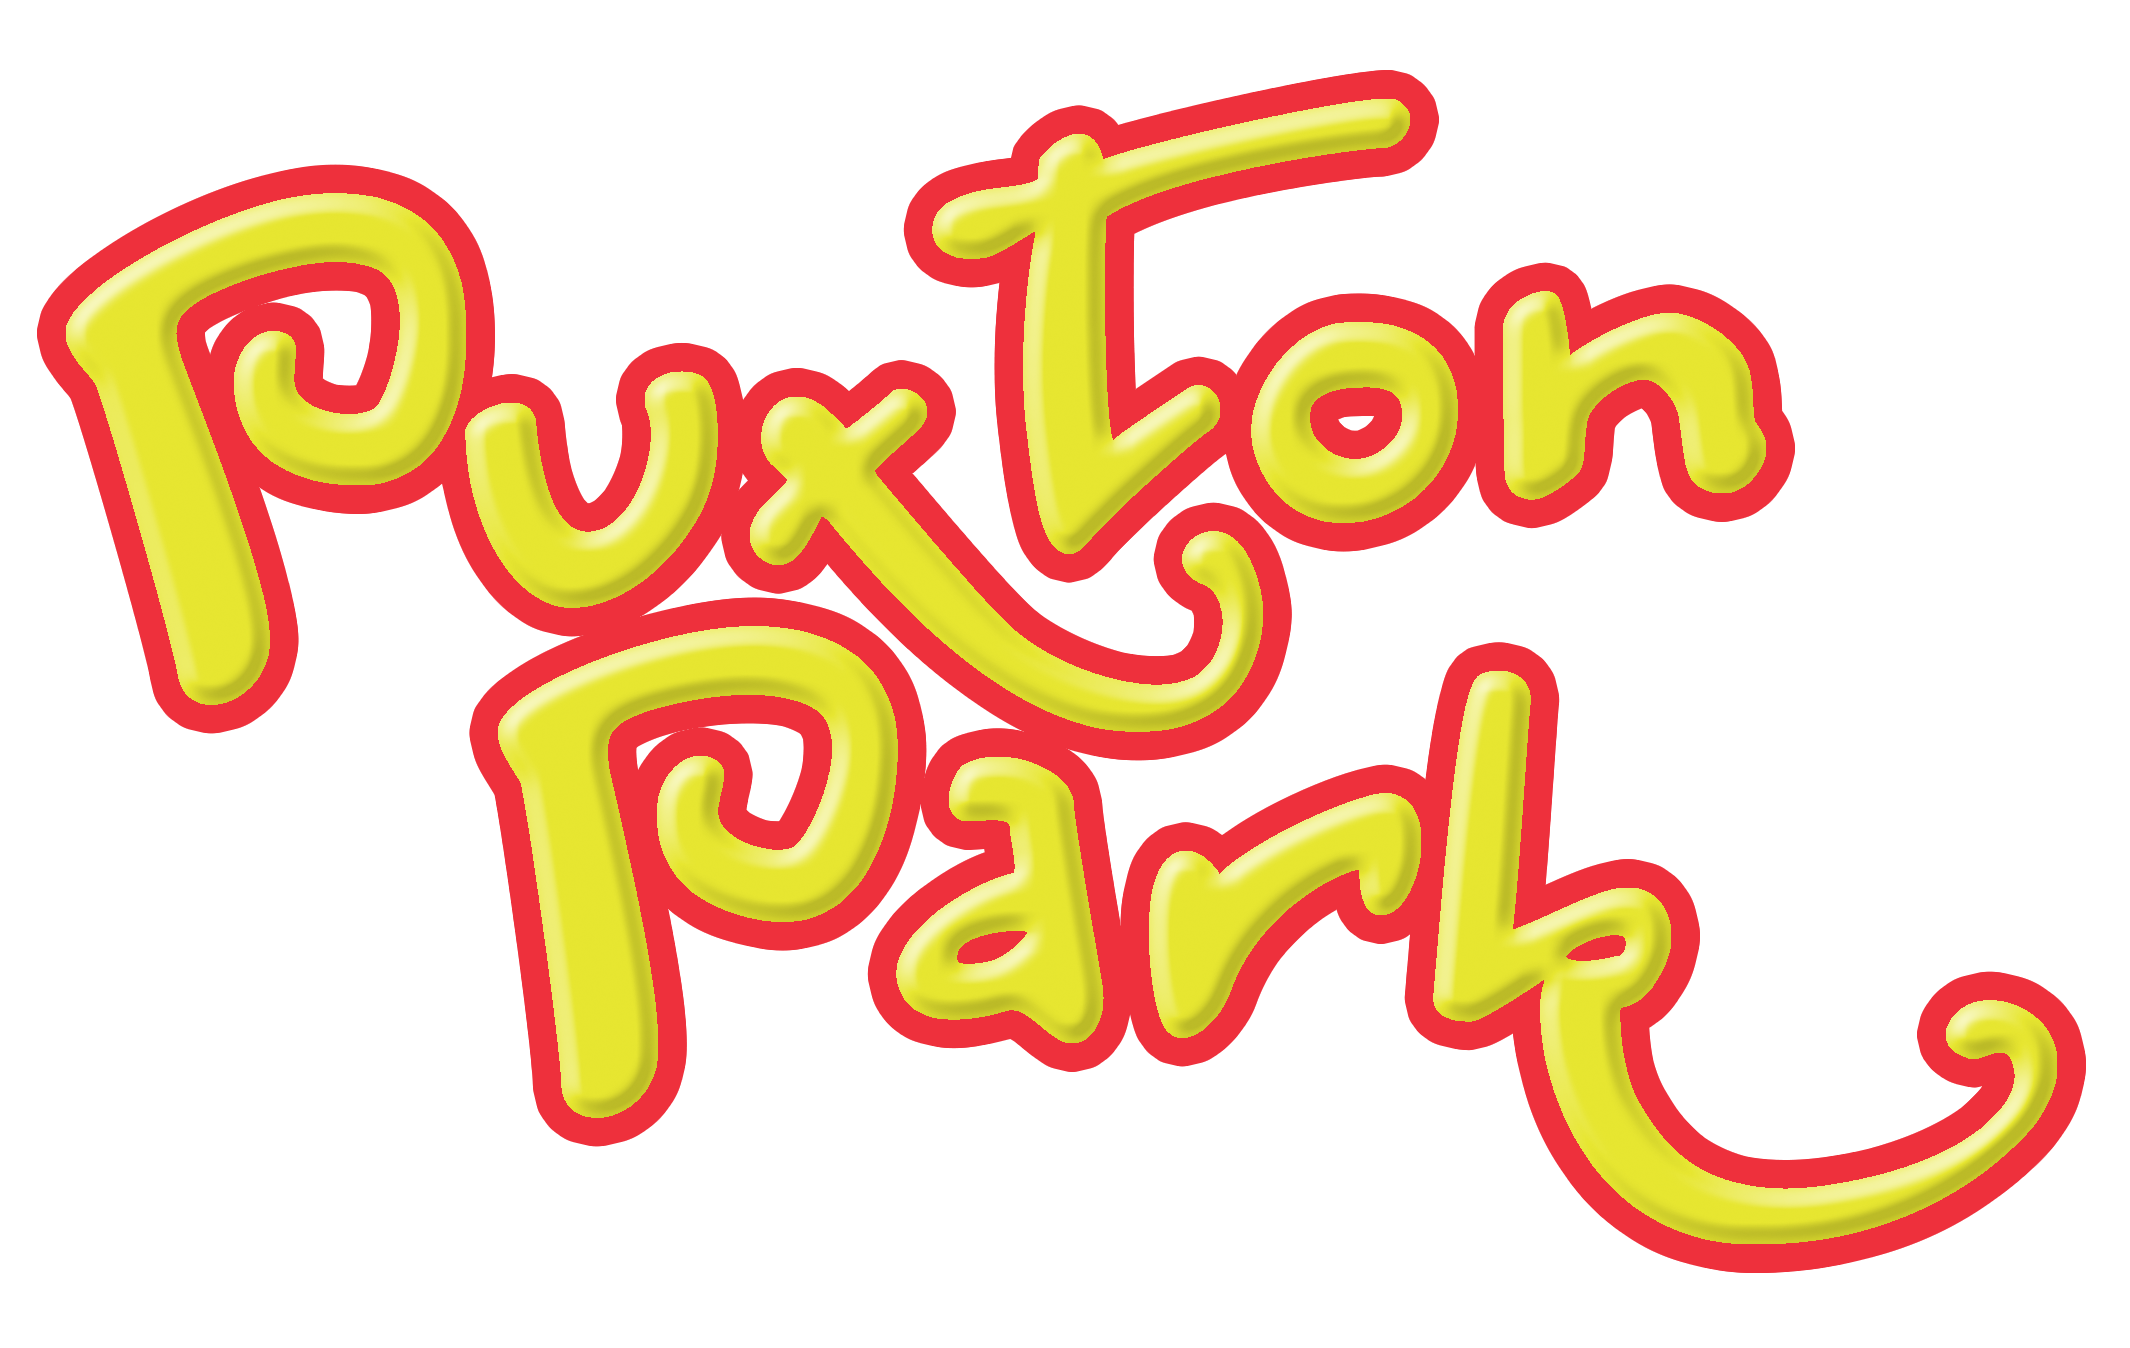 Puxton park logo